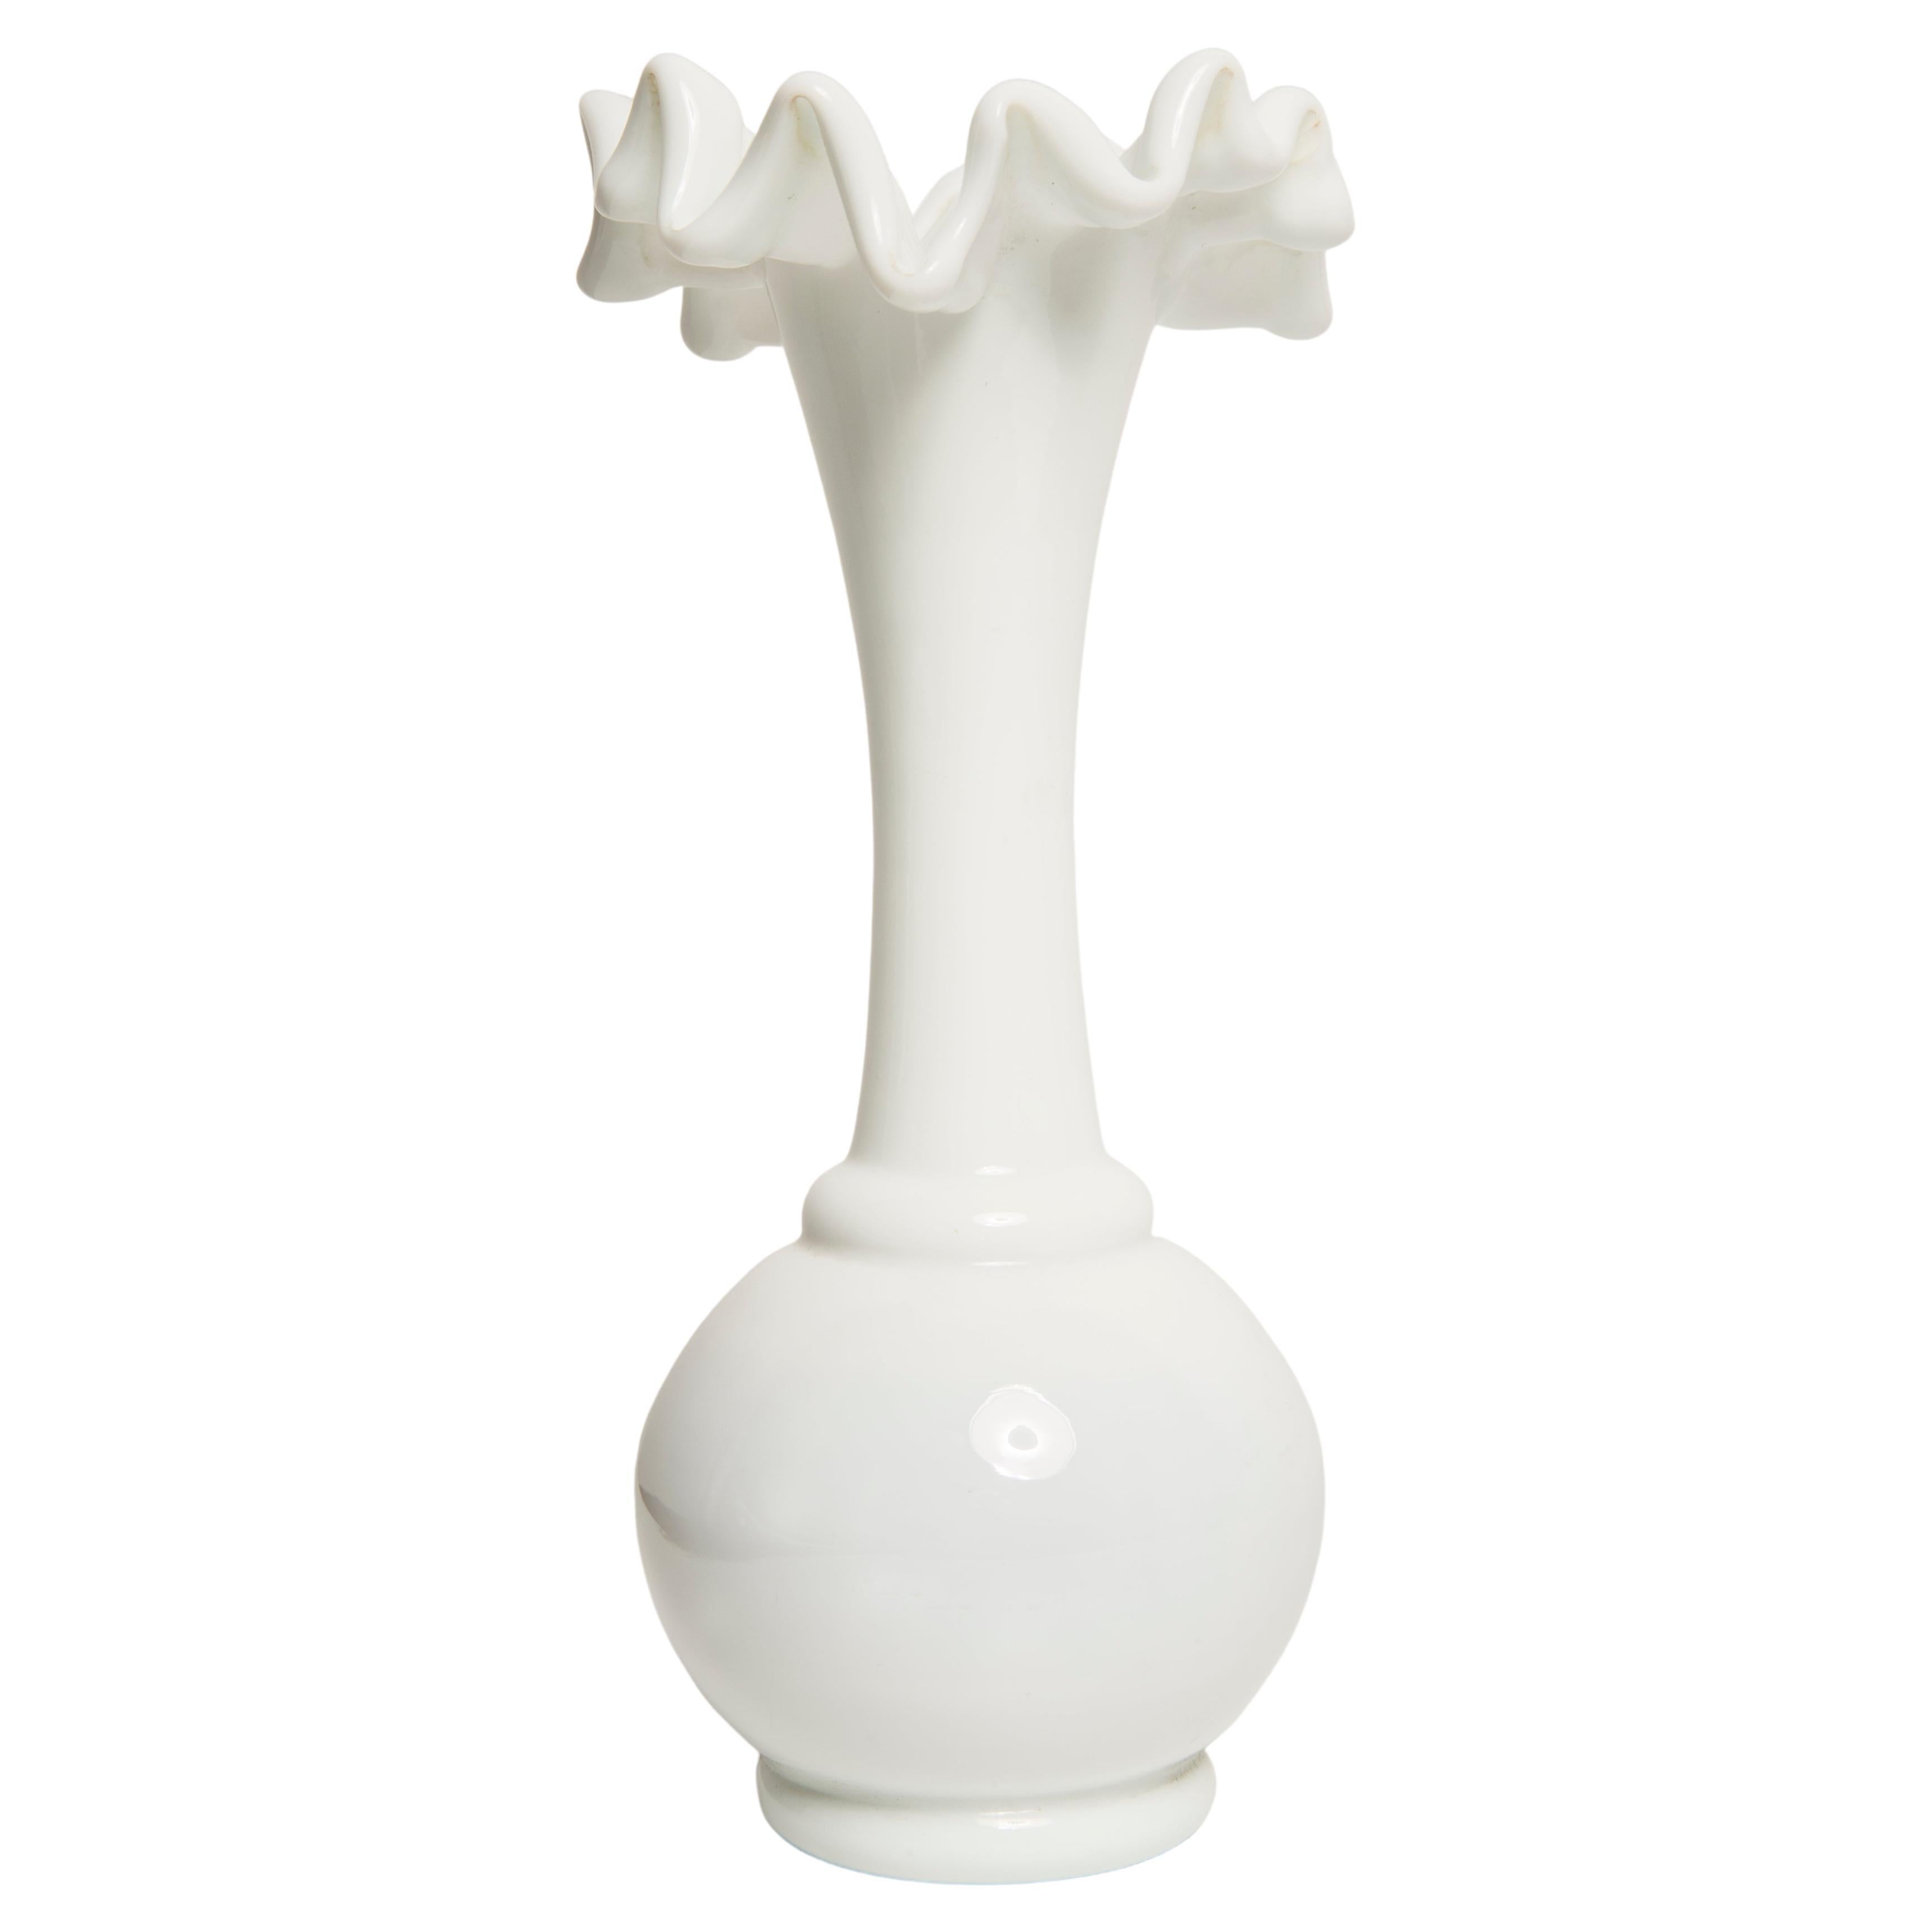 Midcentury Porcelain White Mini Vase with a Frill, Europe, 1960s